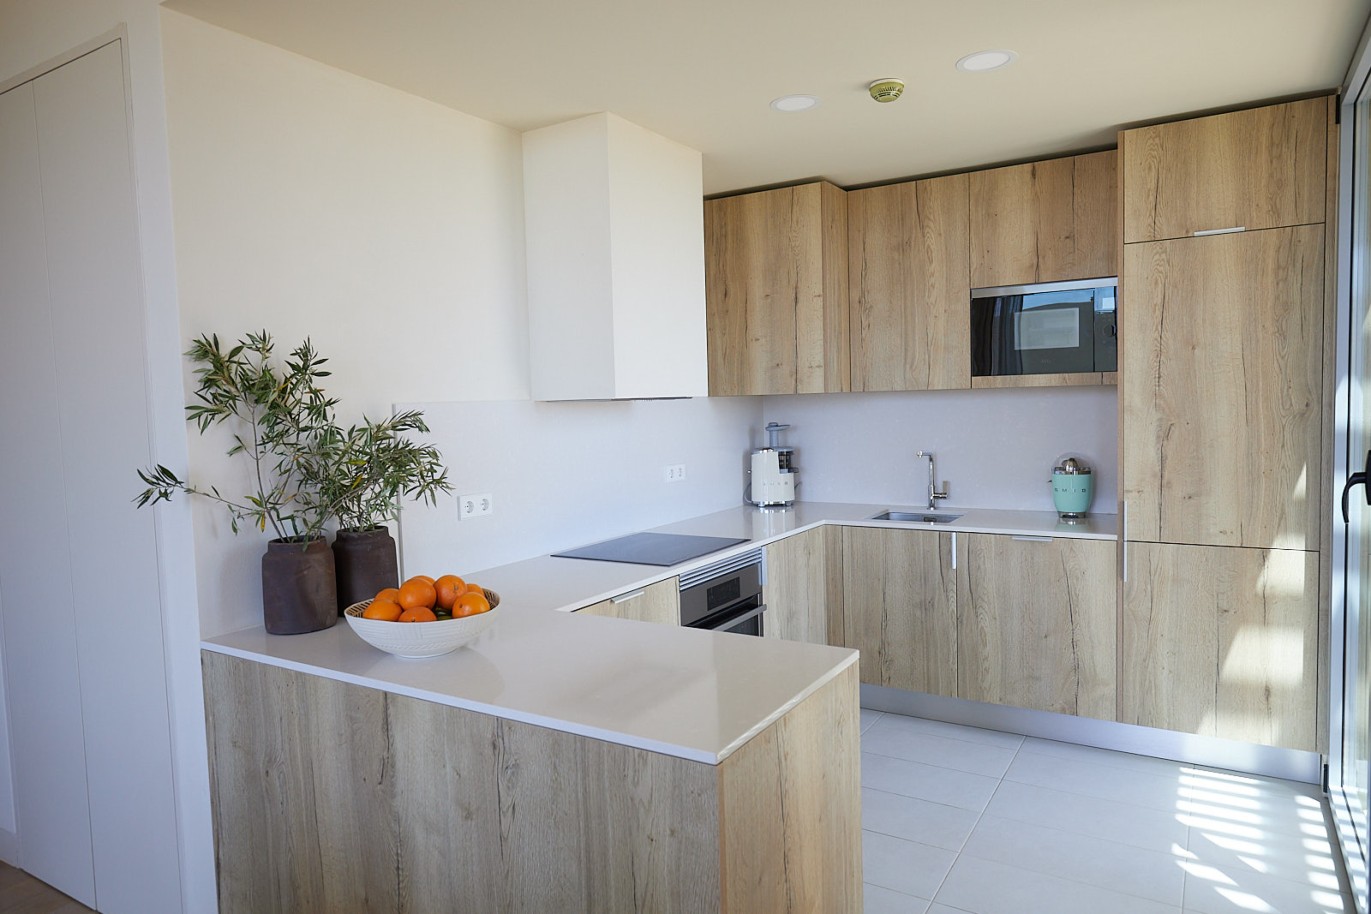 3 bedroom apartment in resort, for sale in Porches, Algarve_228612